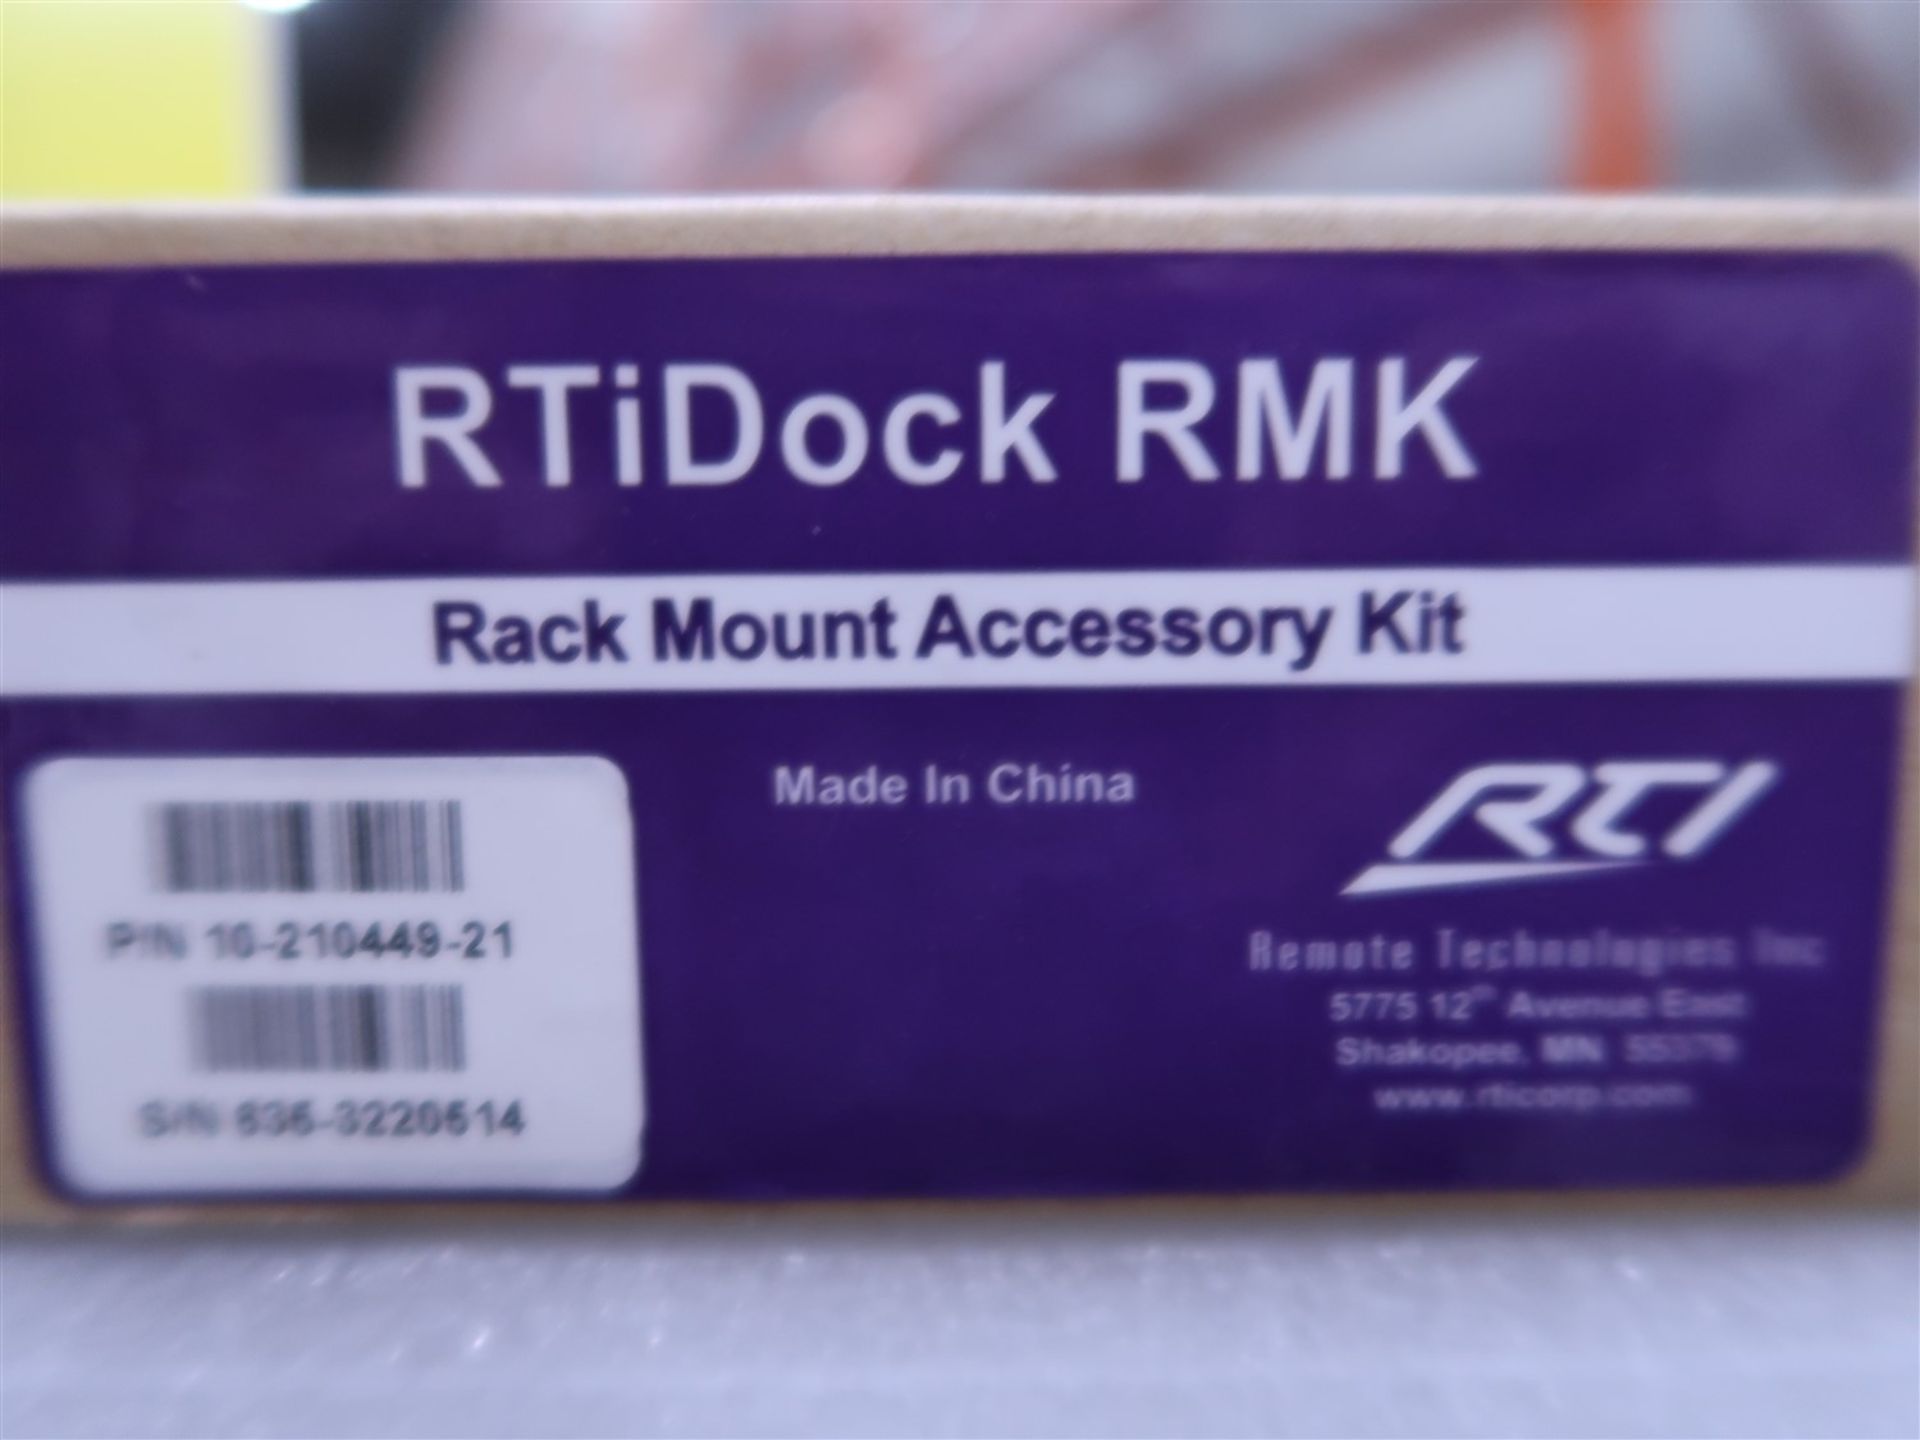 RTI DOCK RMK RACK MOUNT ACCESSORY KIT - Image 2 of 2